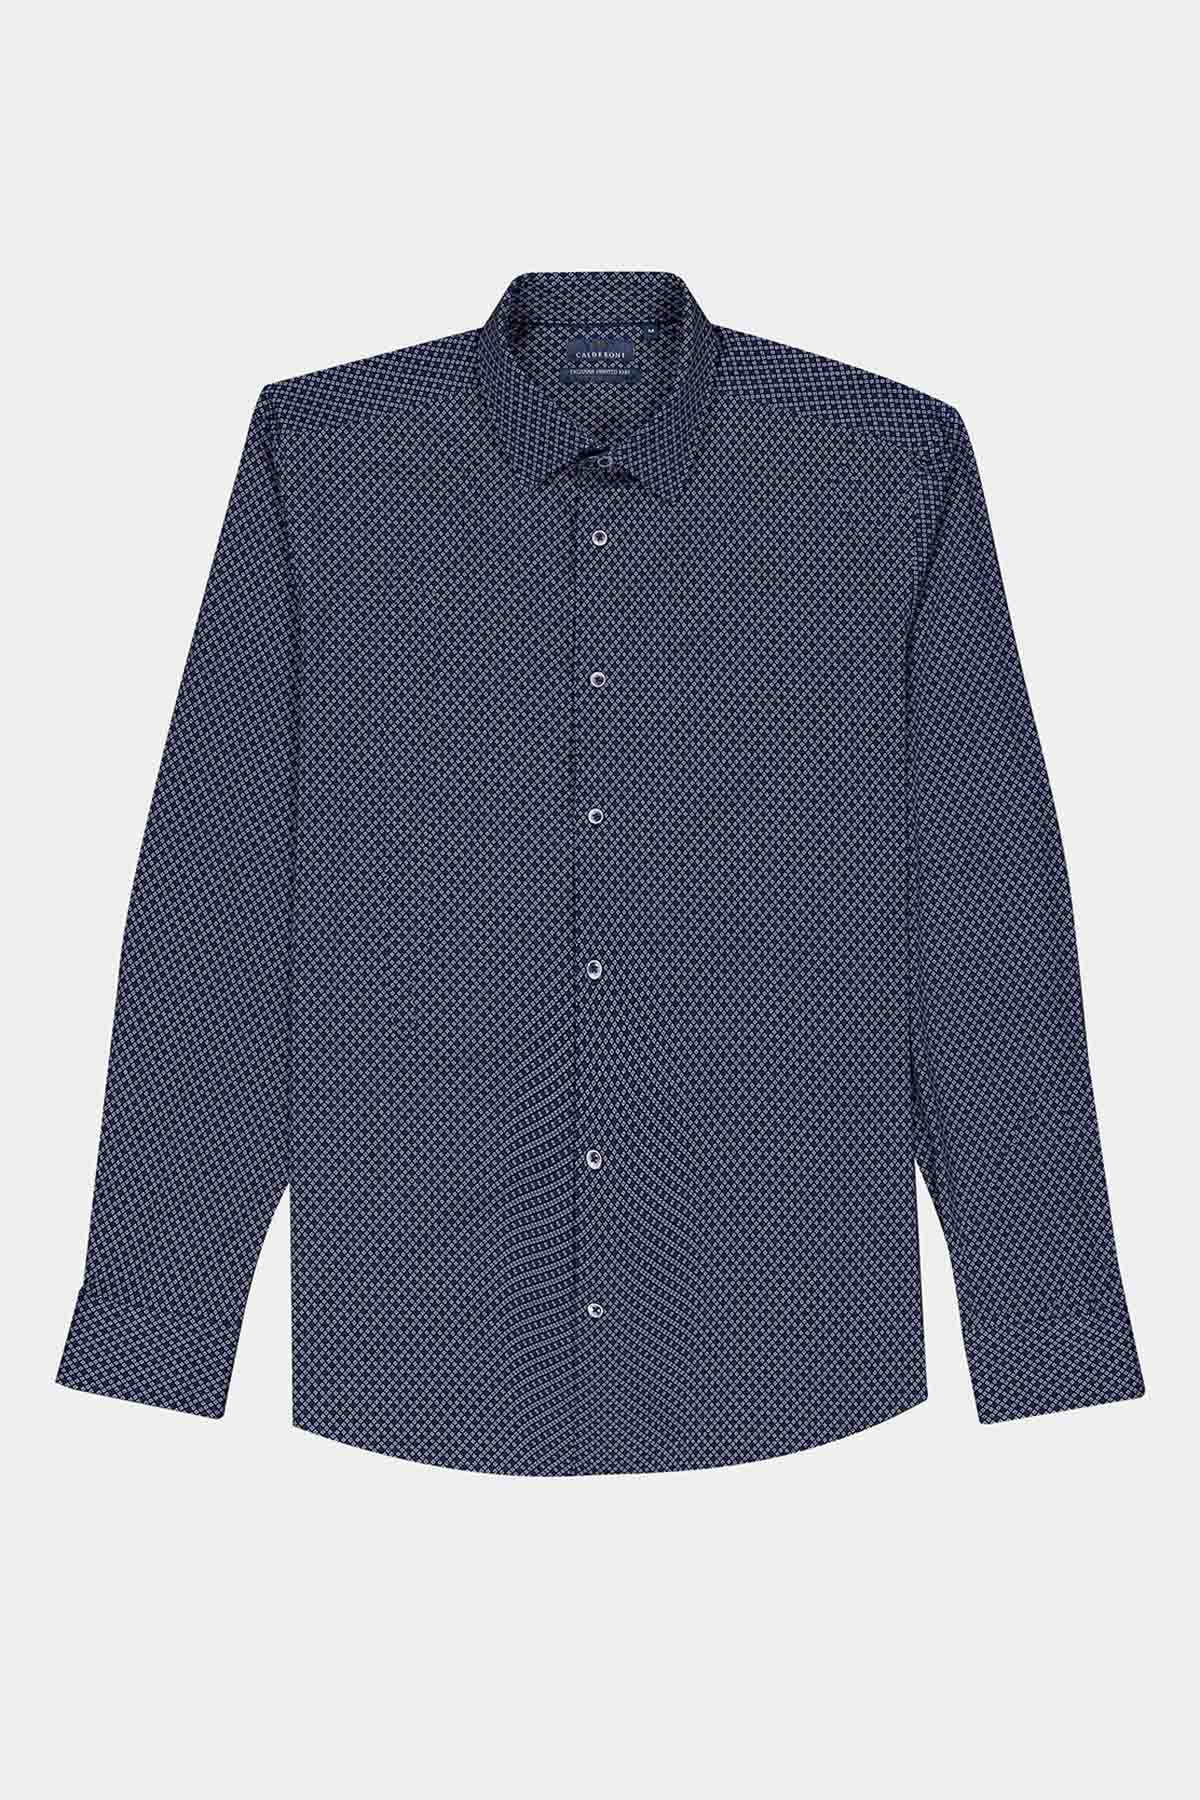 Camisa Knit Mercerized Cotton Calderoni Azul Marino Slim Fit